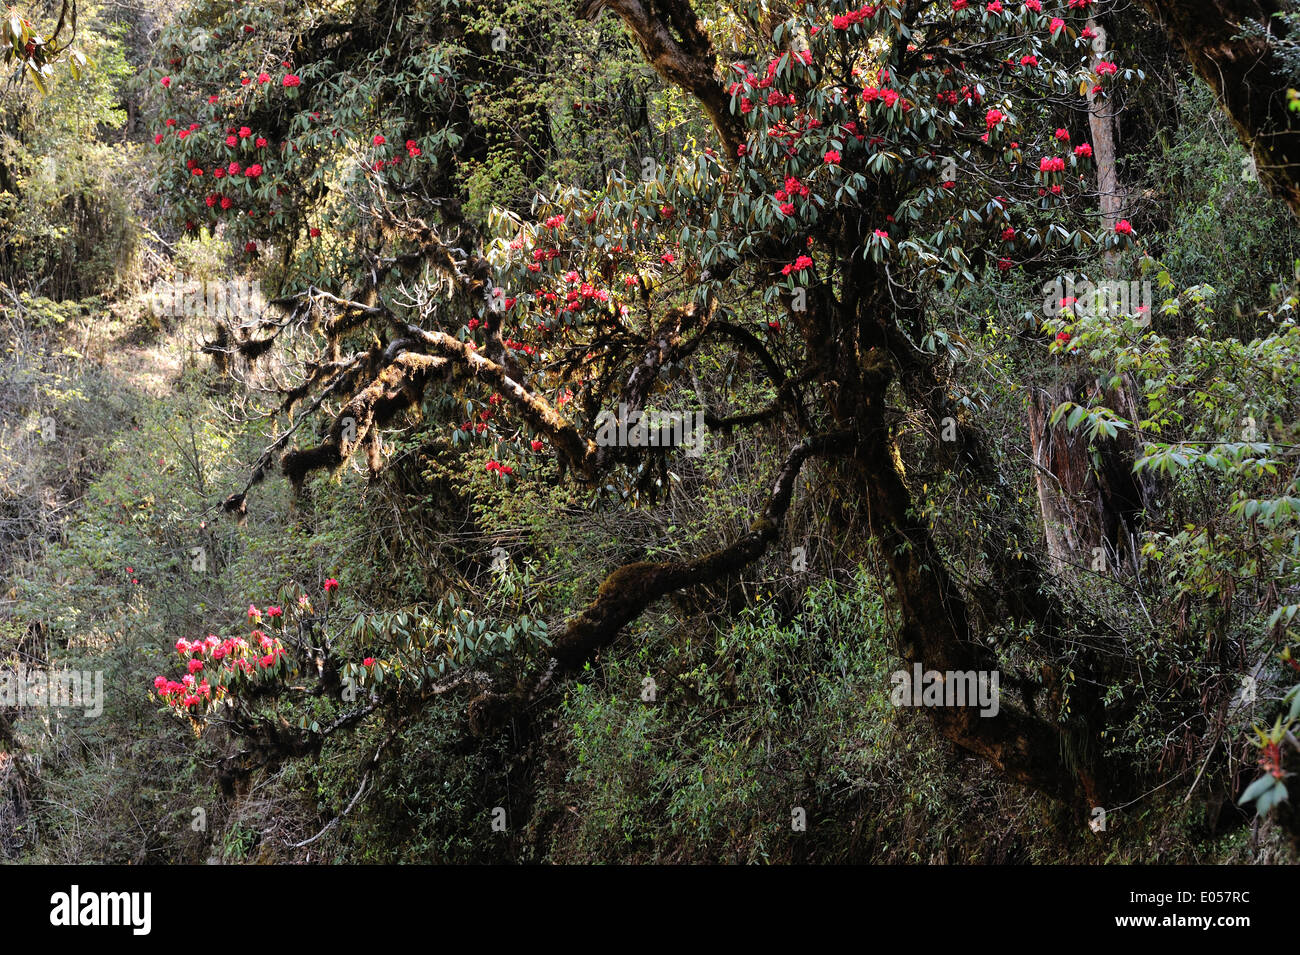 Himalayan forest vegetation in Eastern Bhutan. Image taken on Merak Sakteng trek. Stock Photo